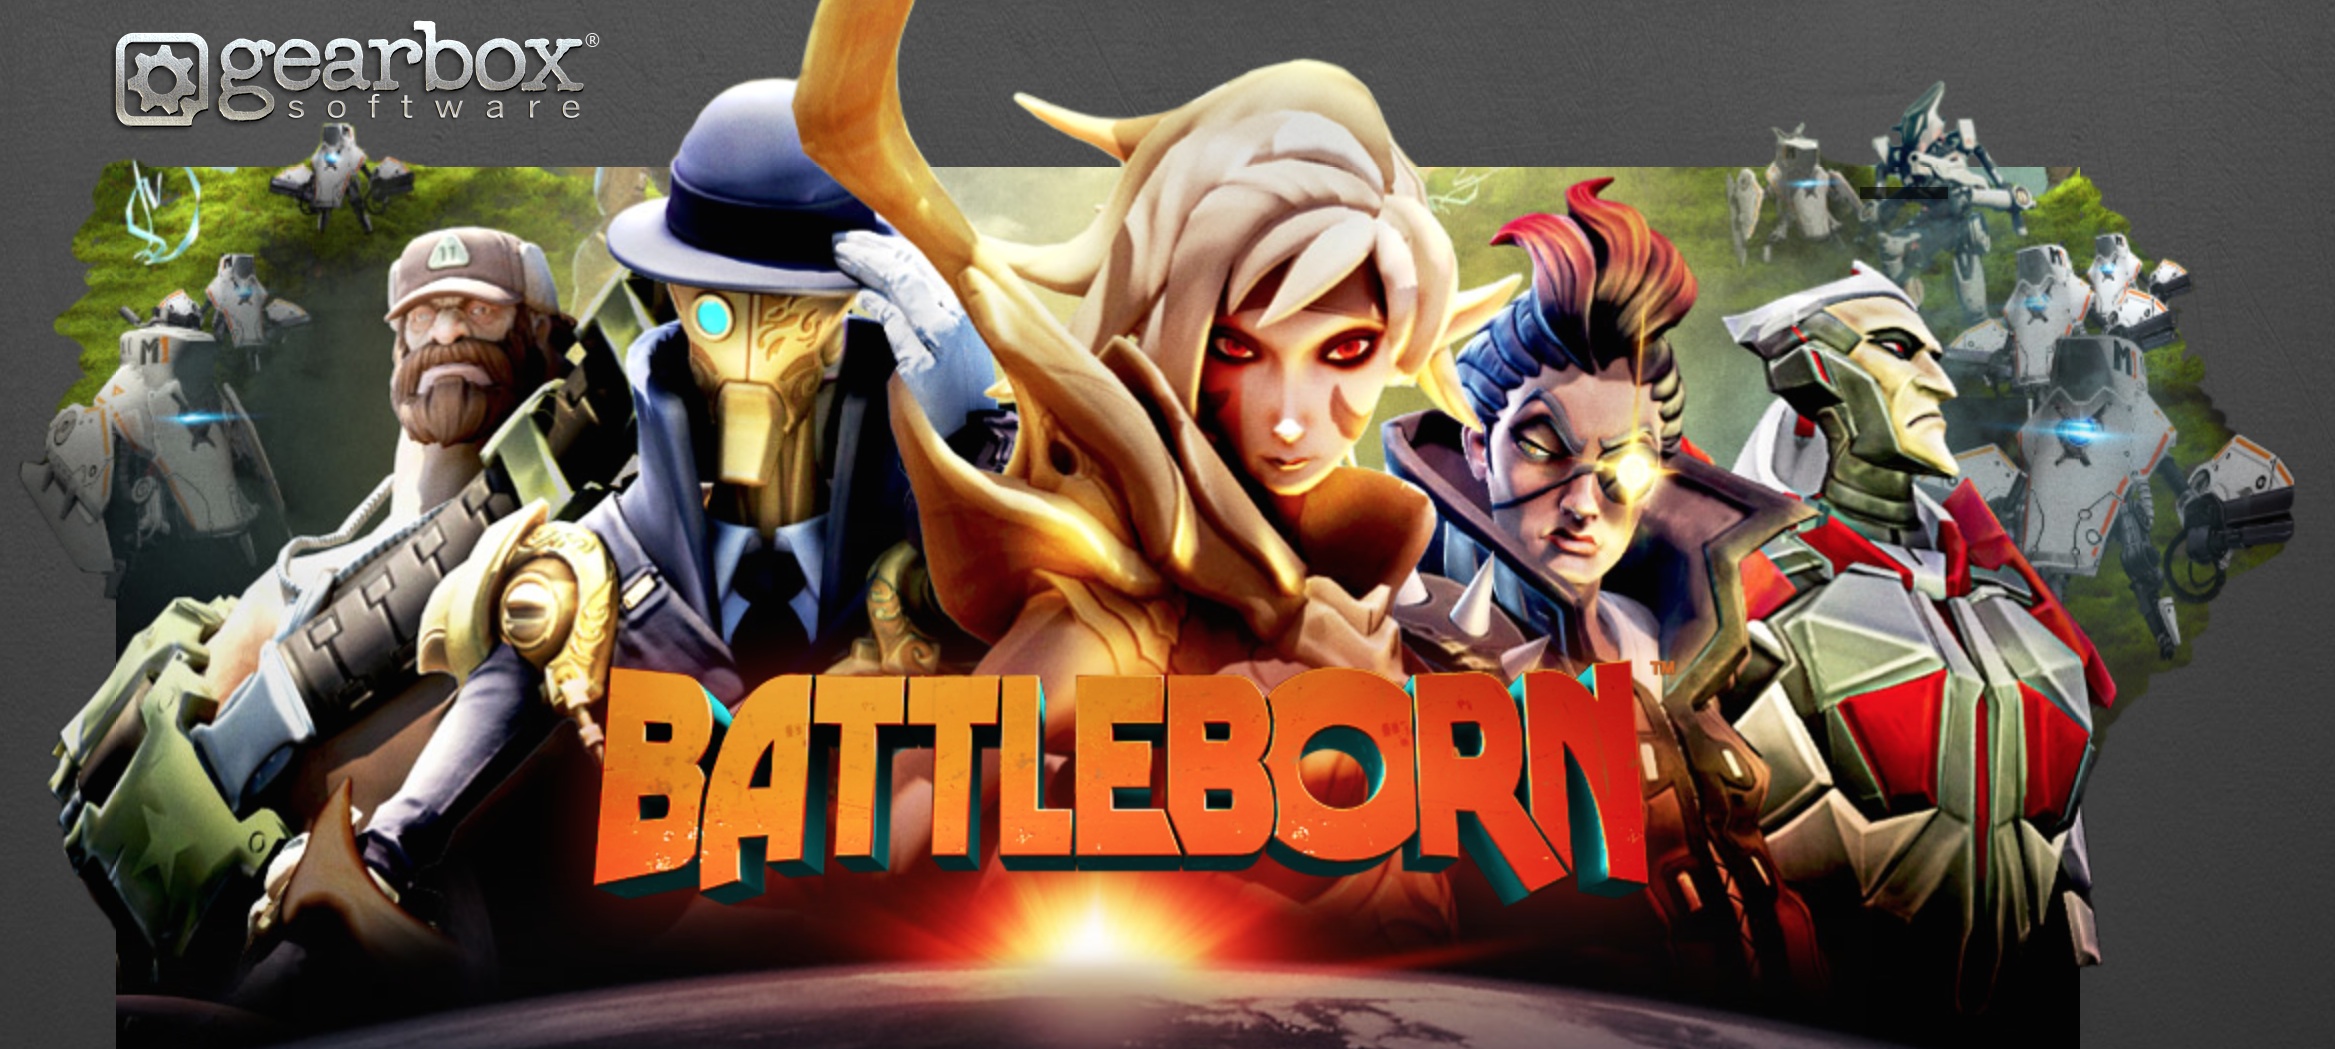 Battleborn - Gearbox Software